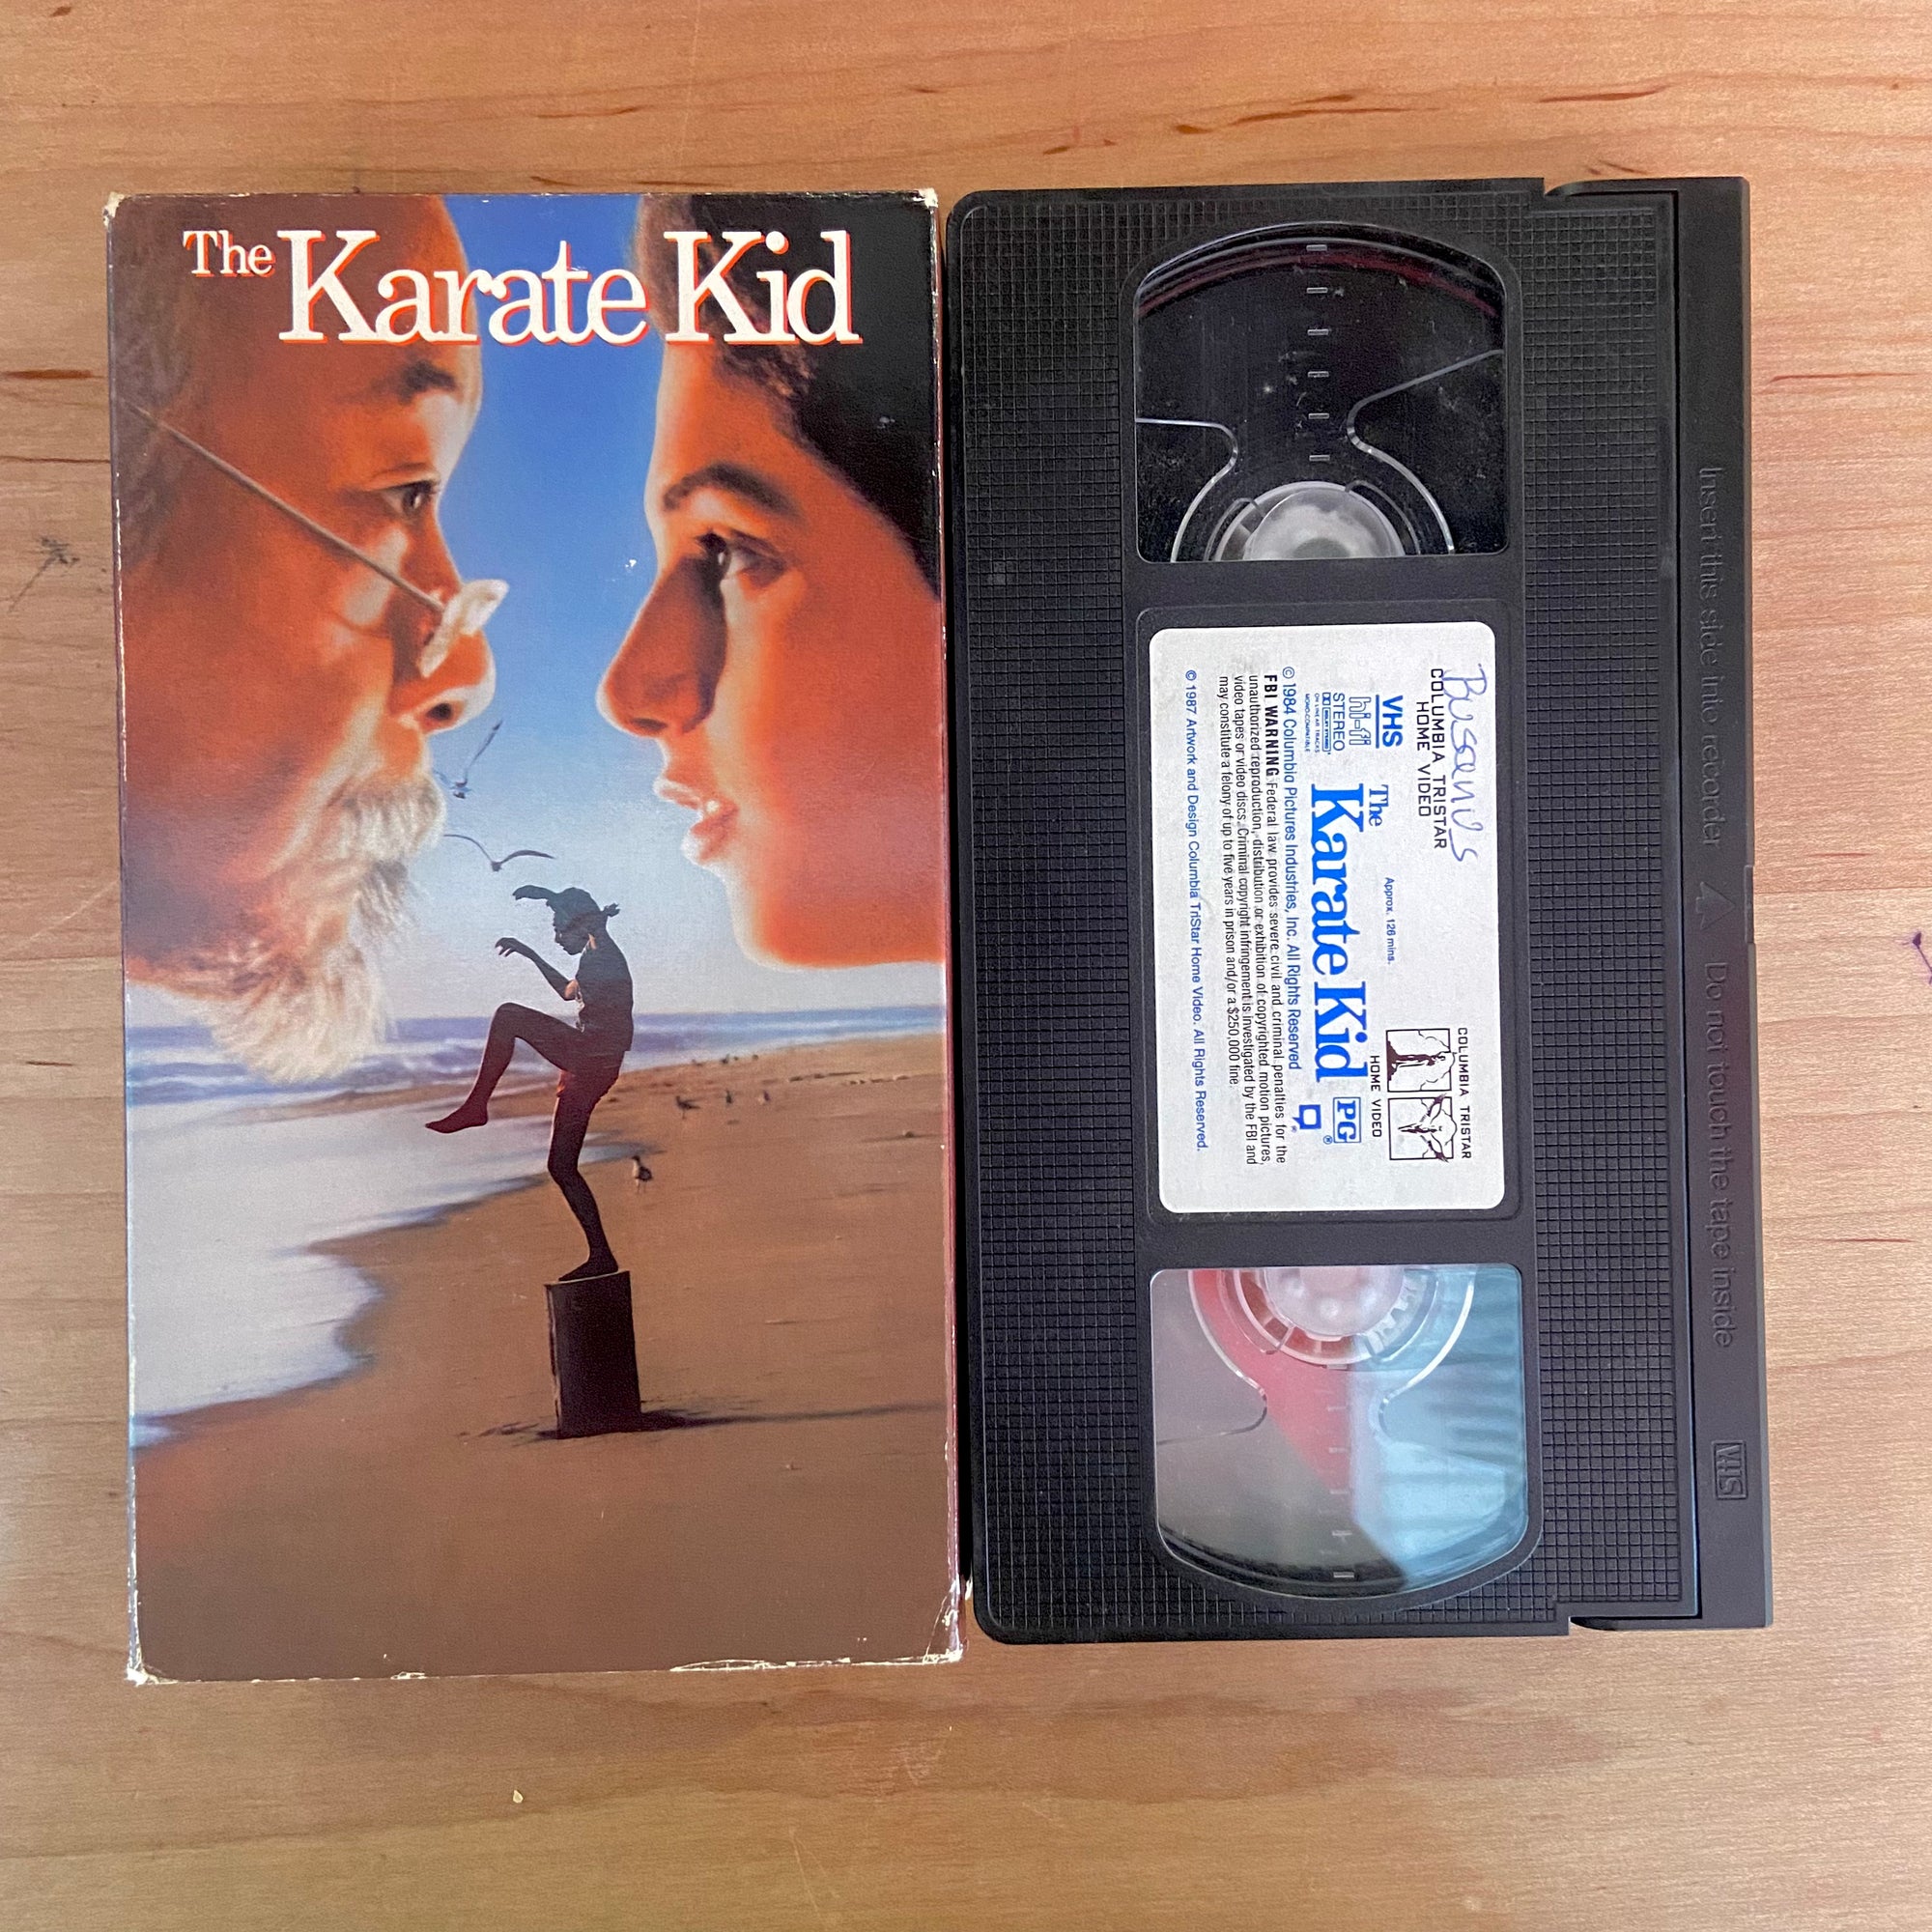 The Karate Kid - VHS Tape (Used)